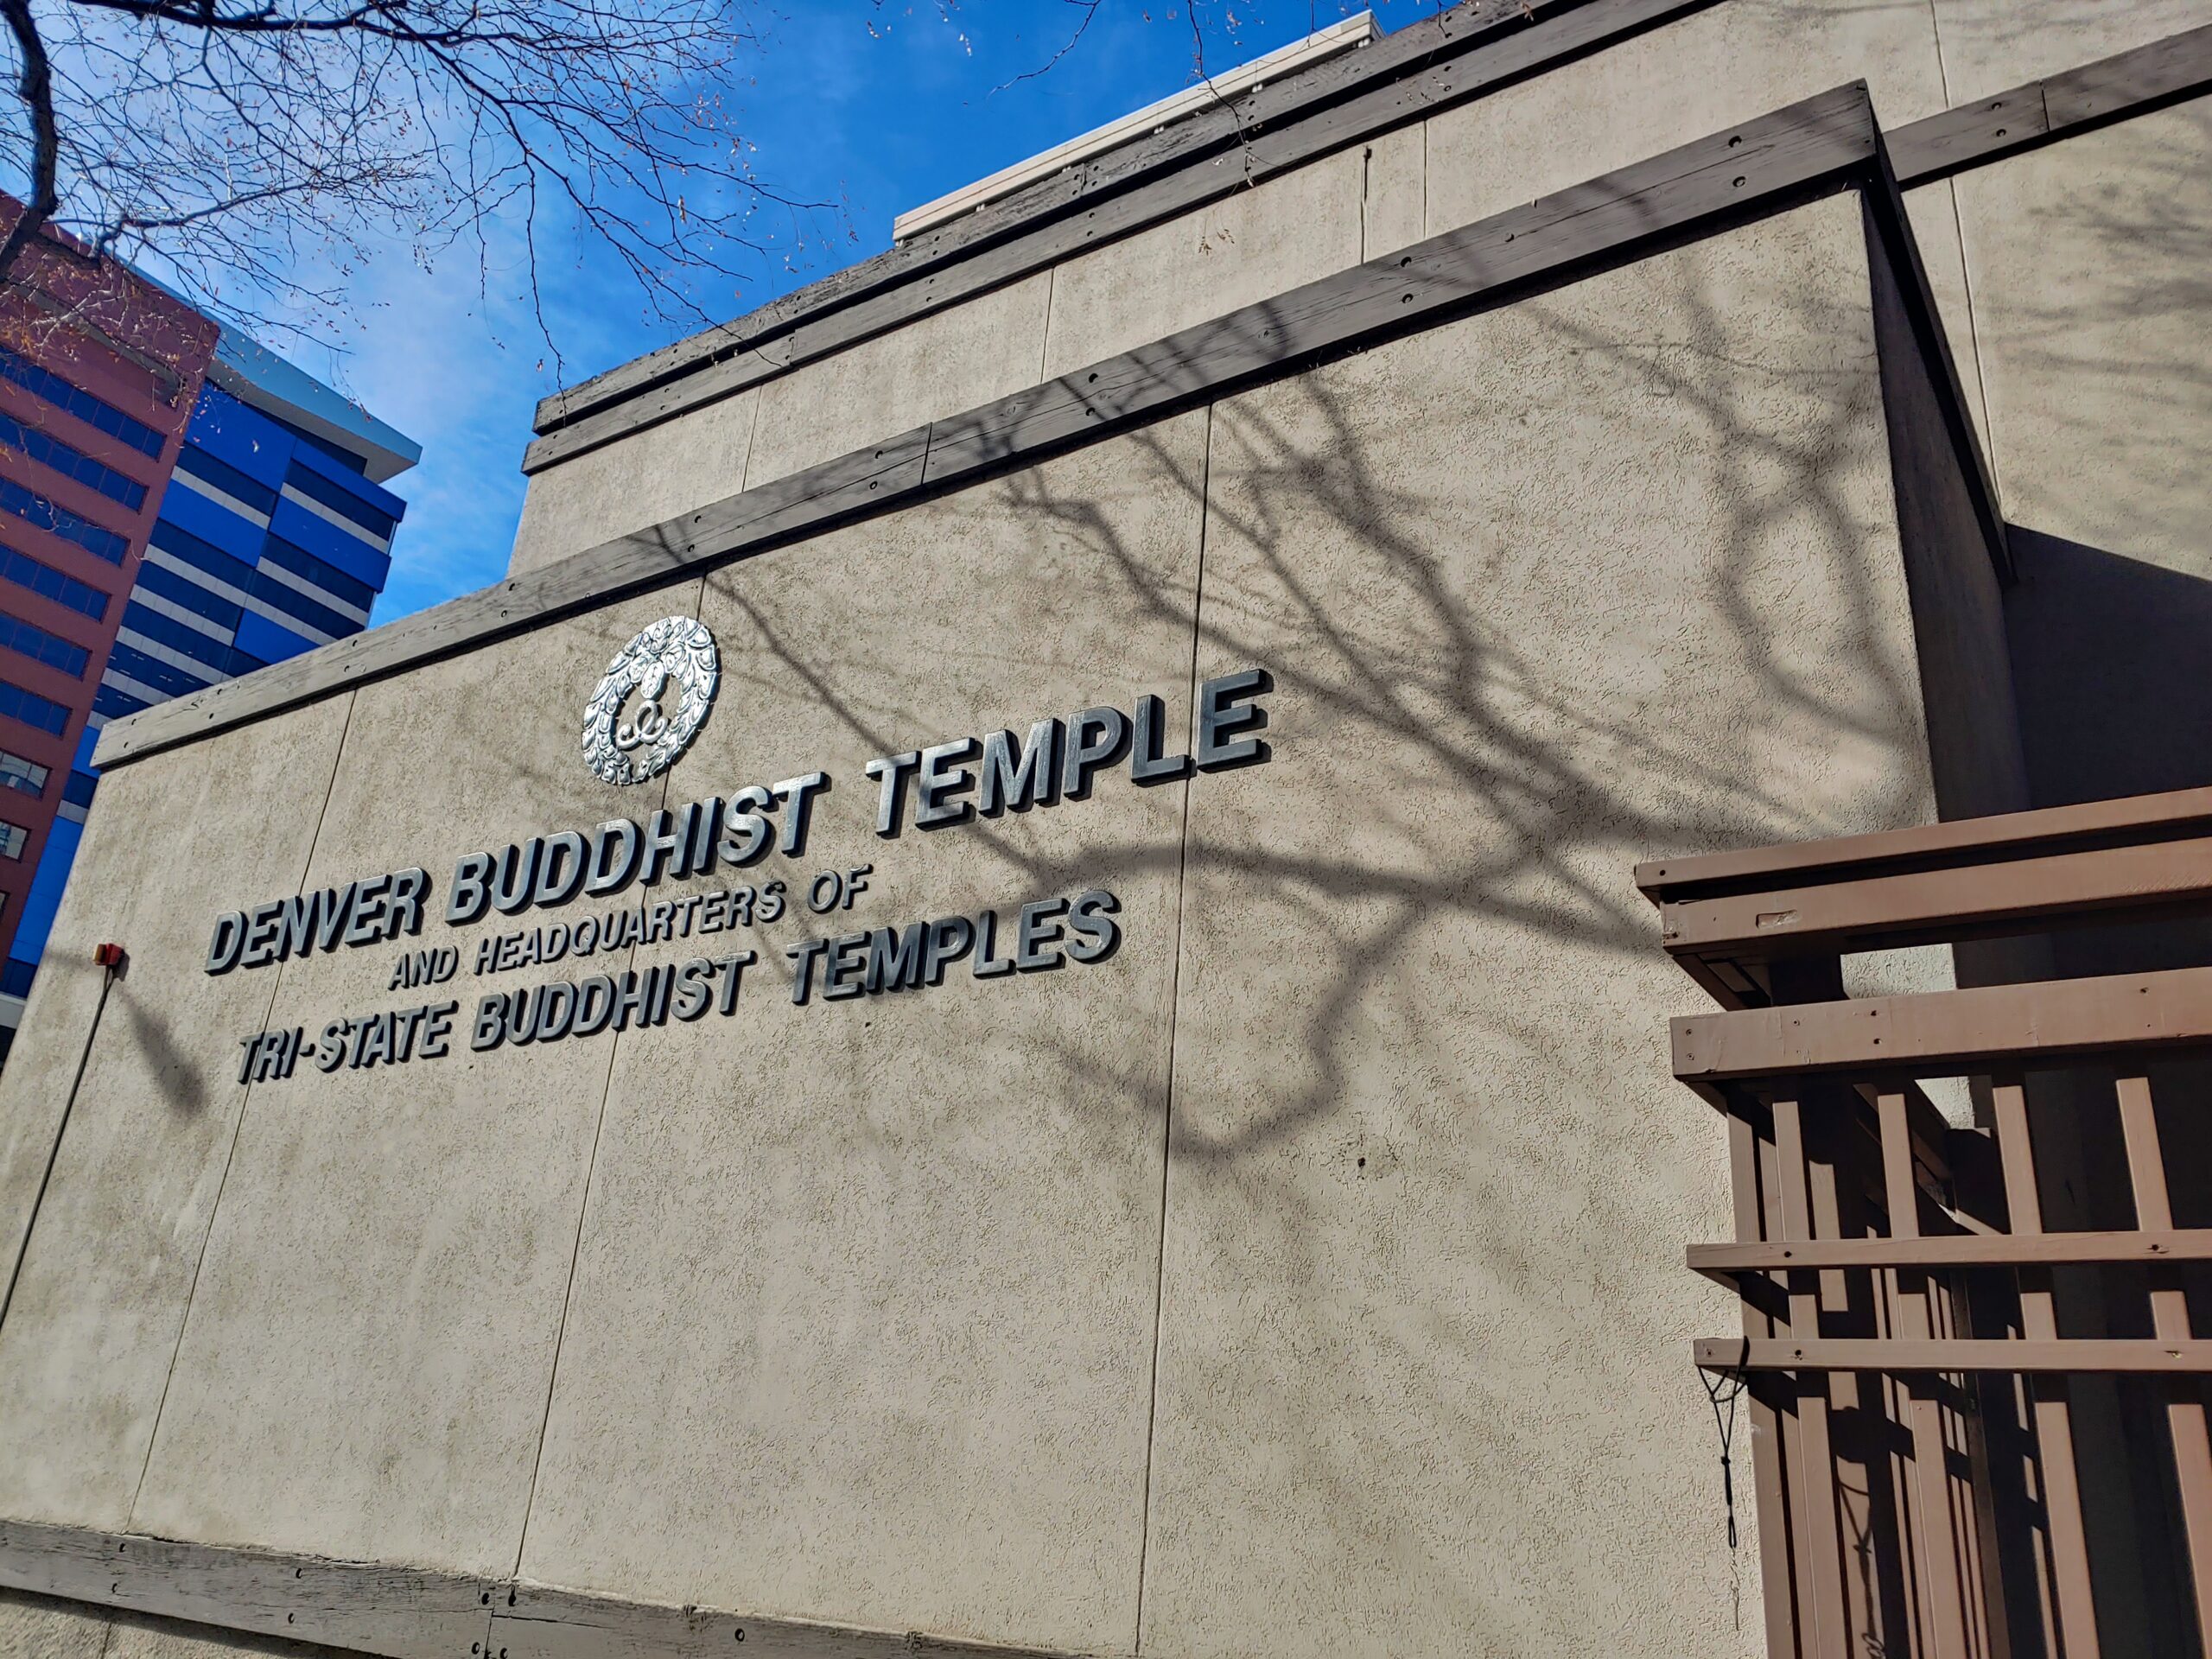 The Denver Buddhist Temple